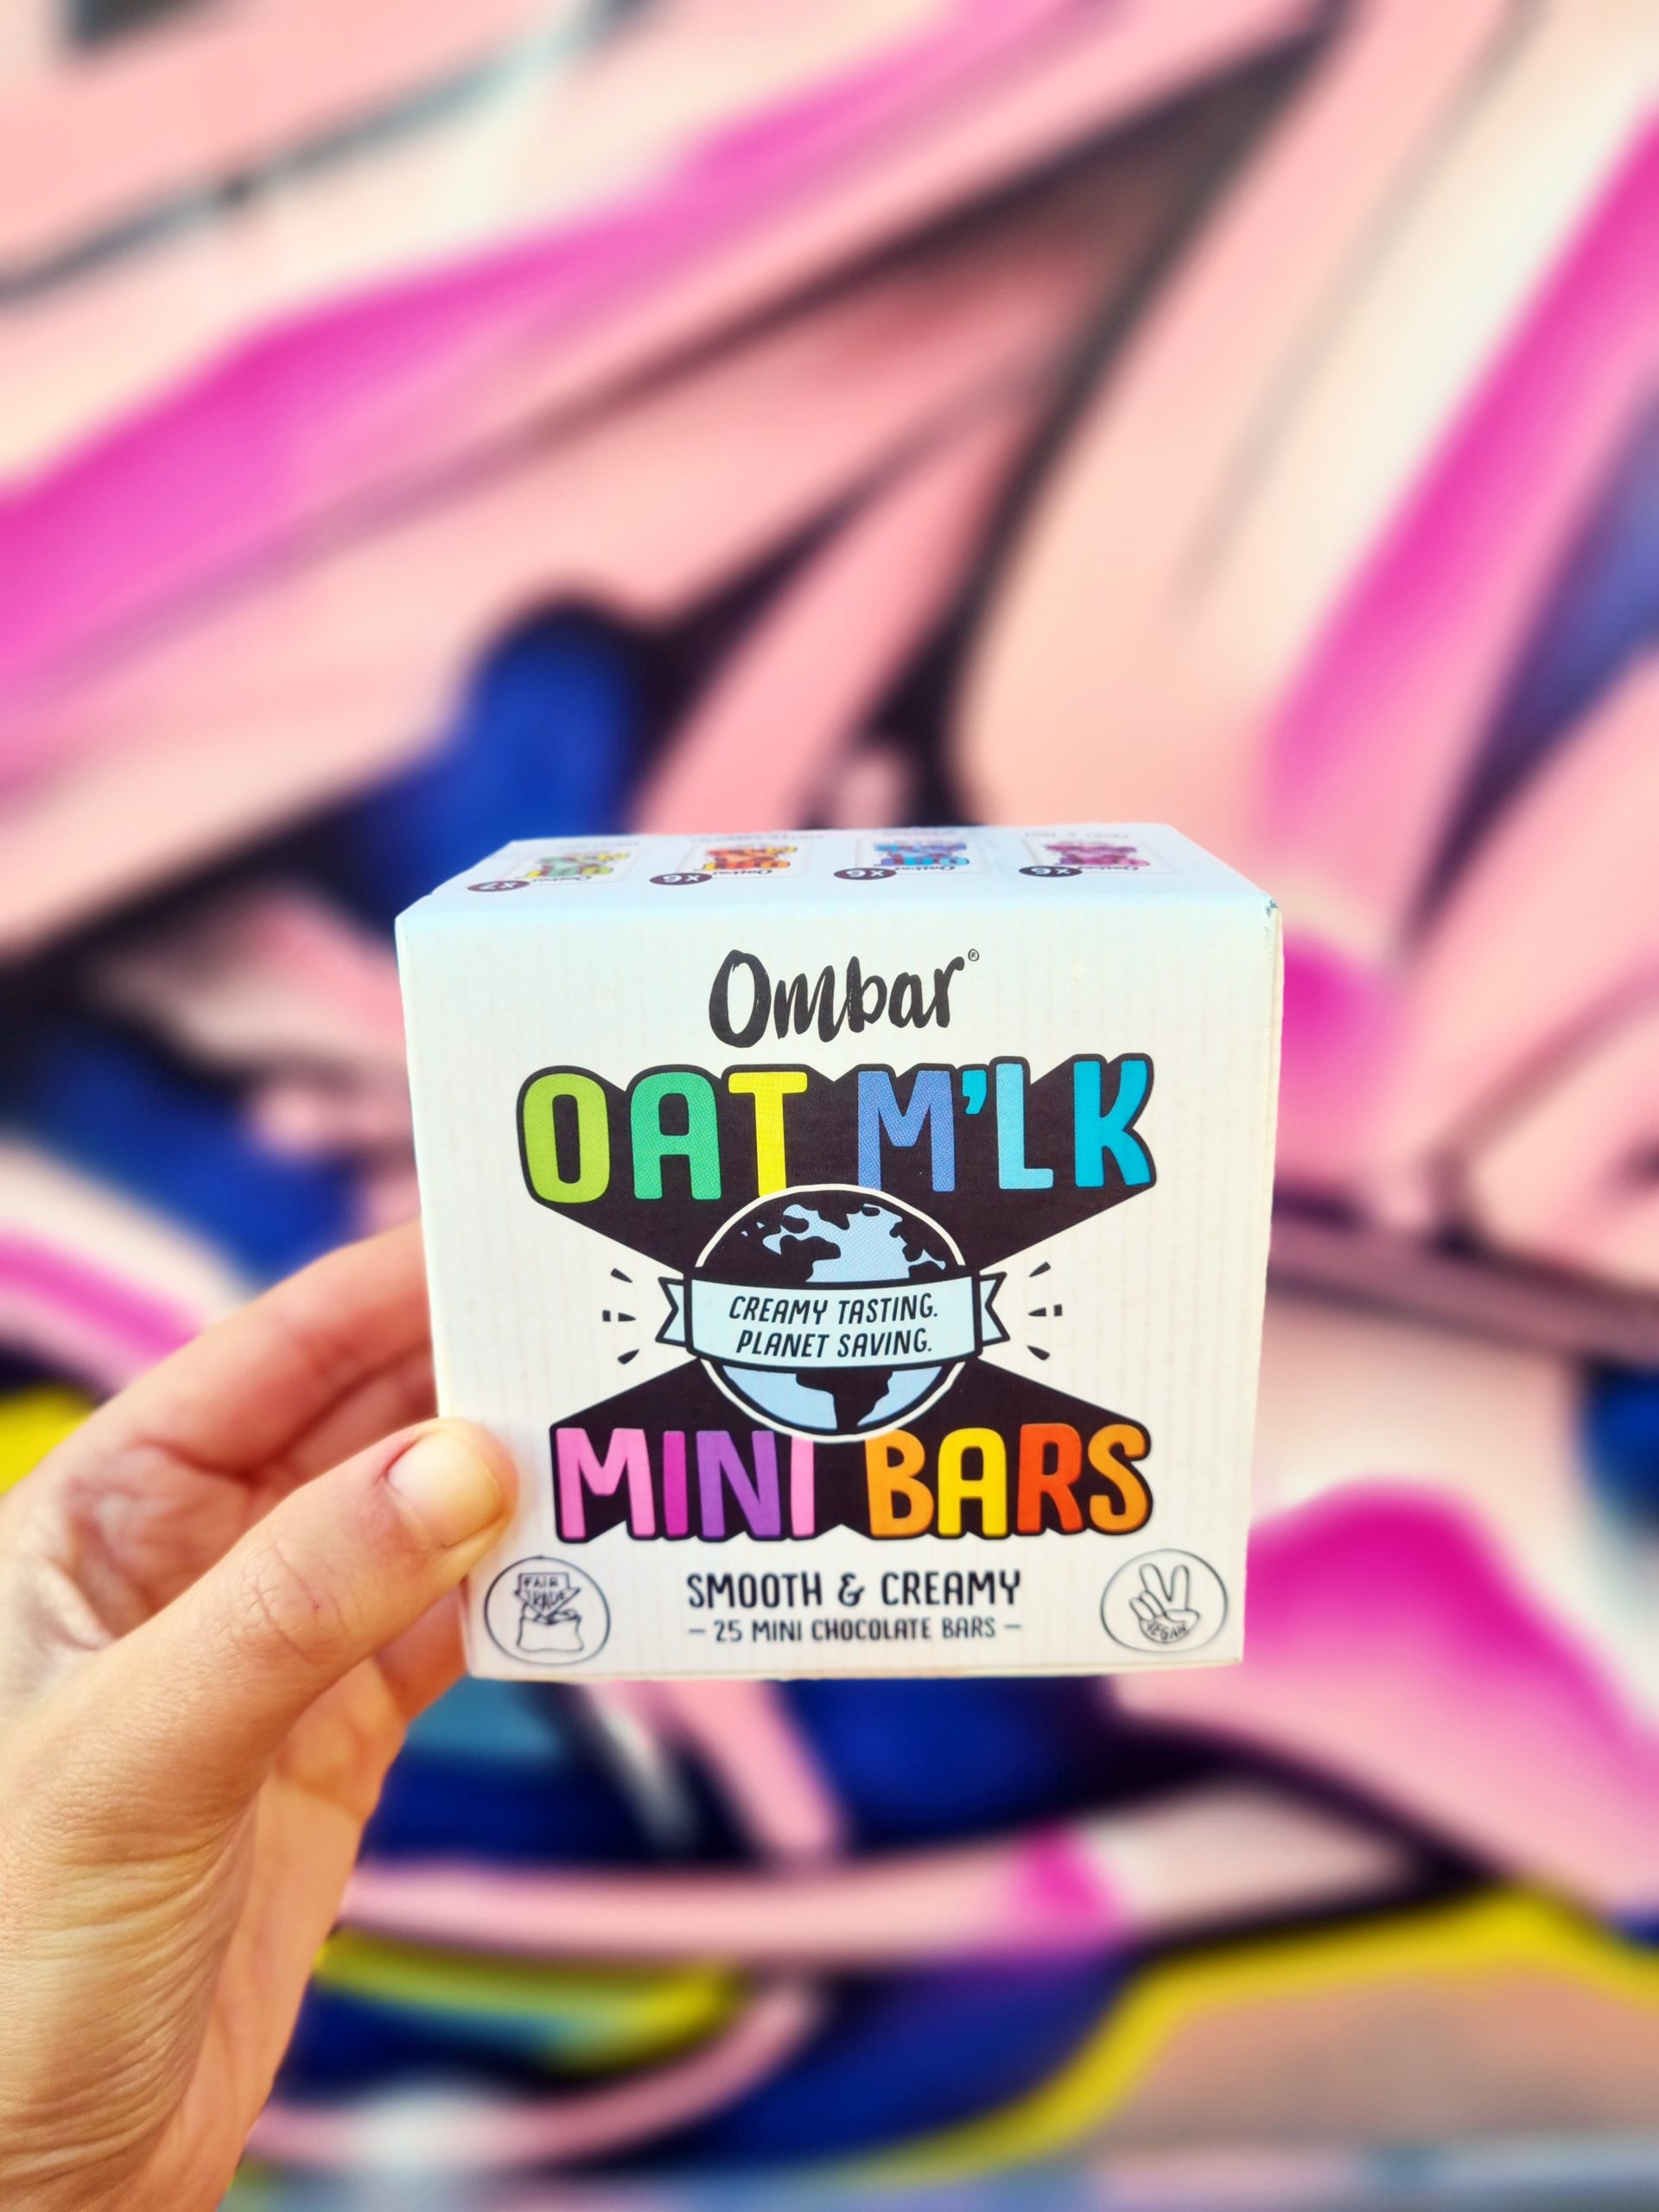 <img src="ombar.jpg" alt="ombar oat milk chocolate mini bars"/> 